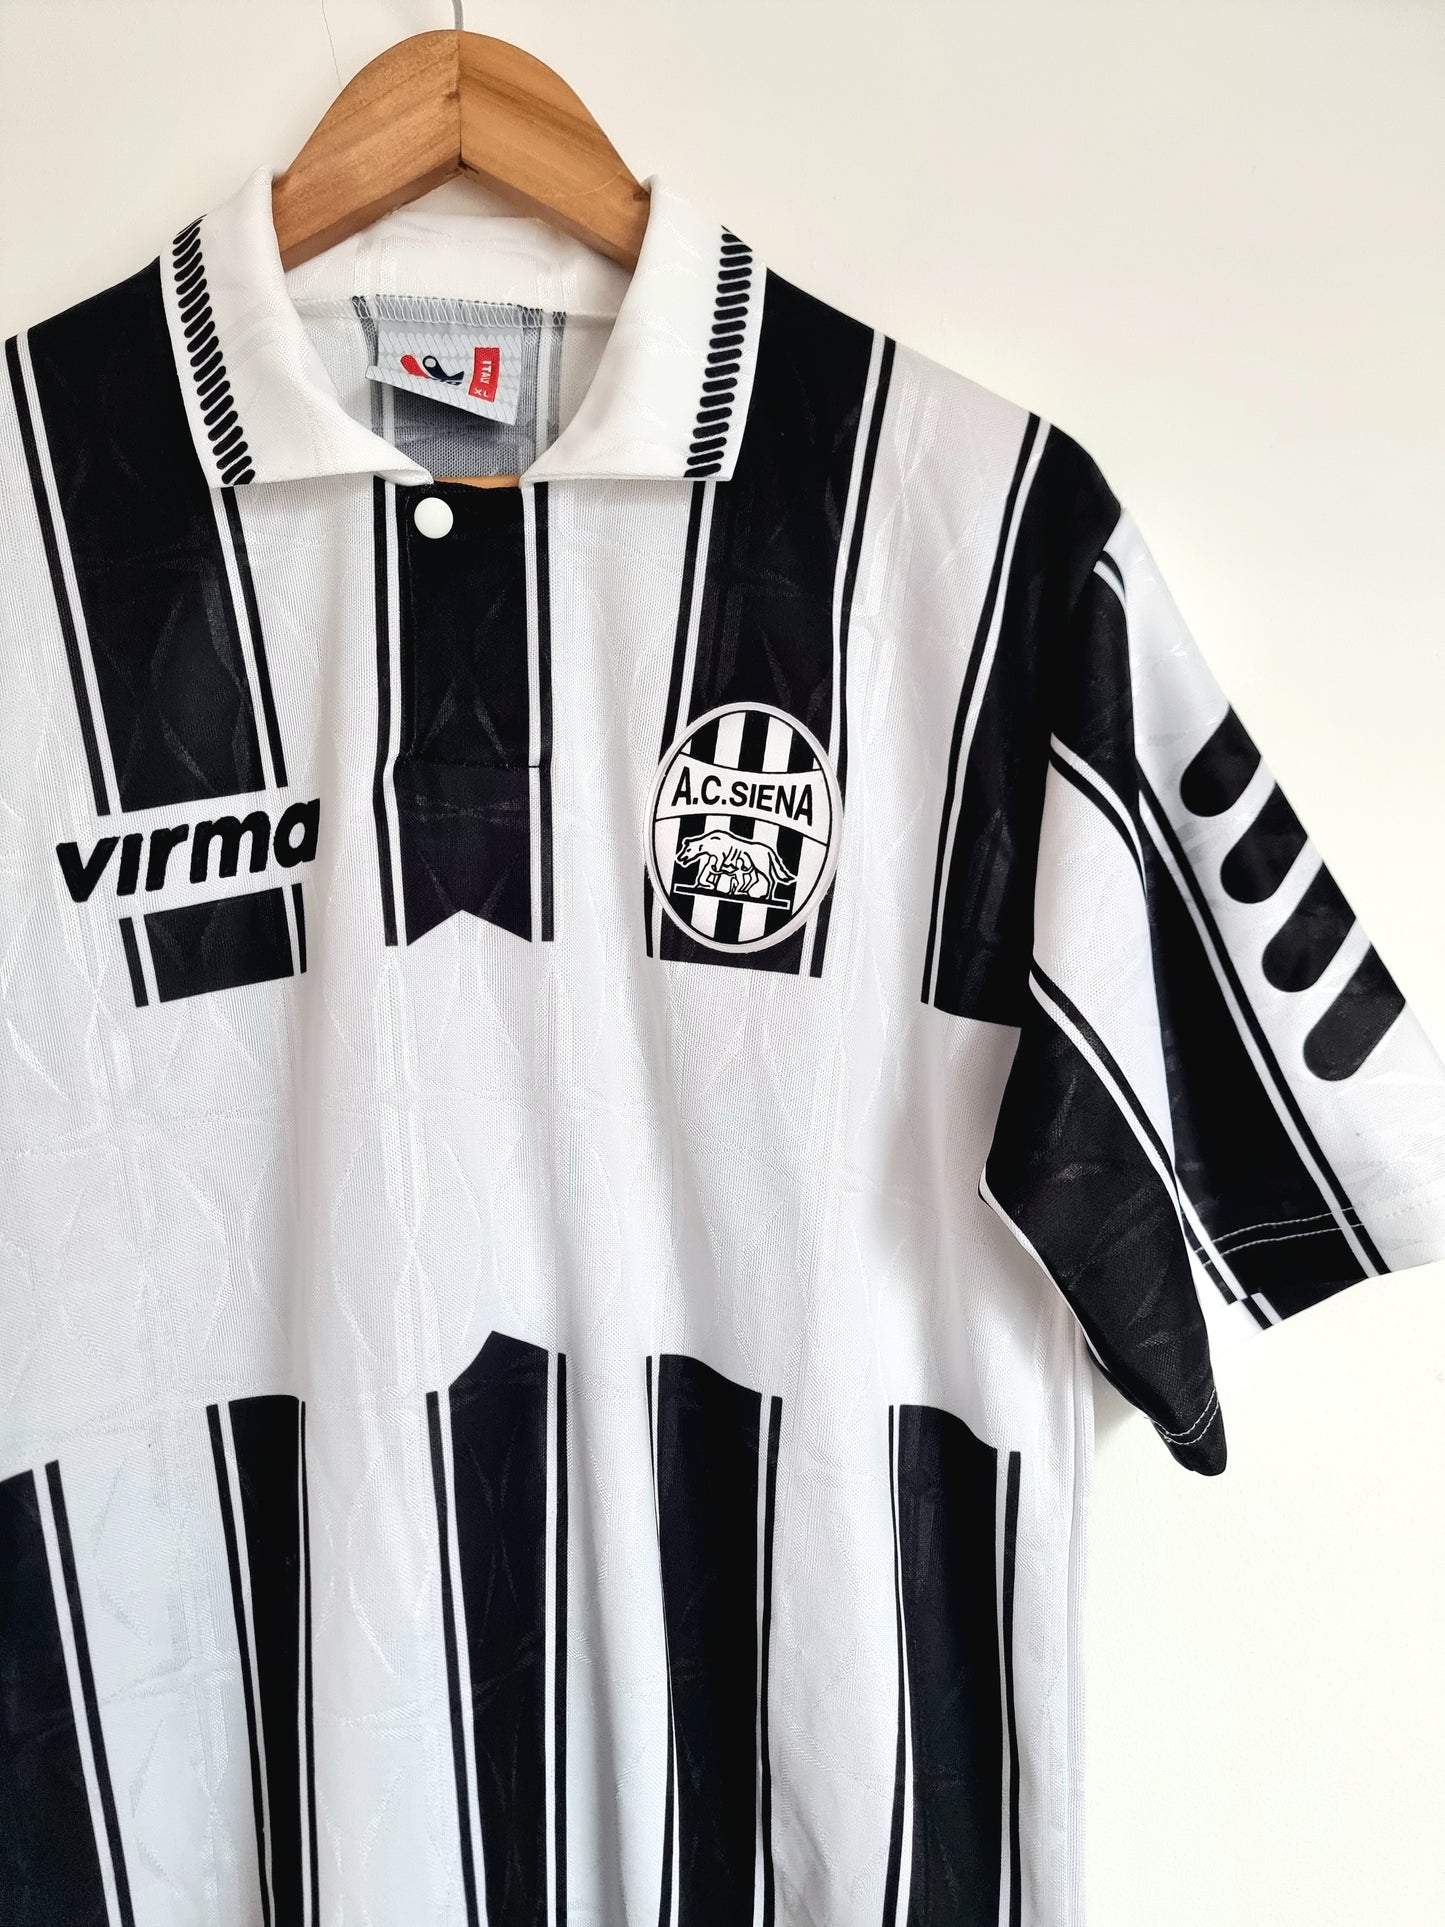 Virma Siena 97/98 Match Issue Home Shirt XL